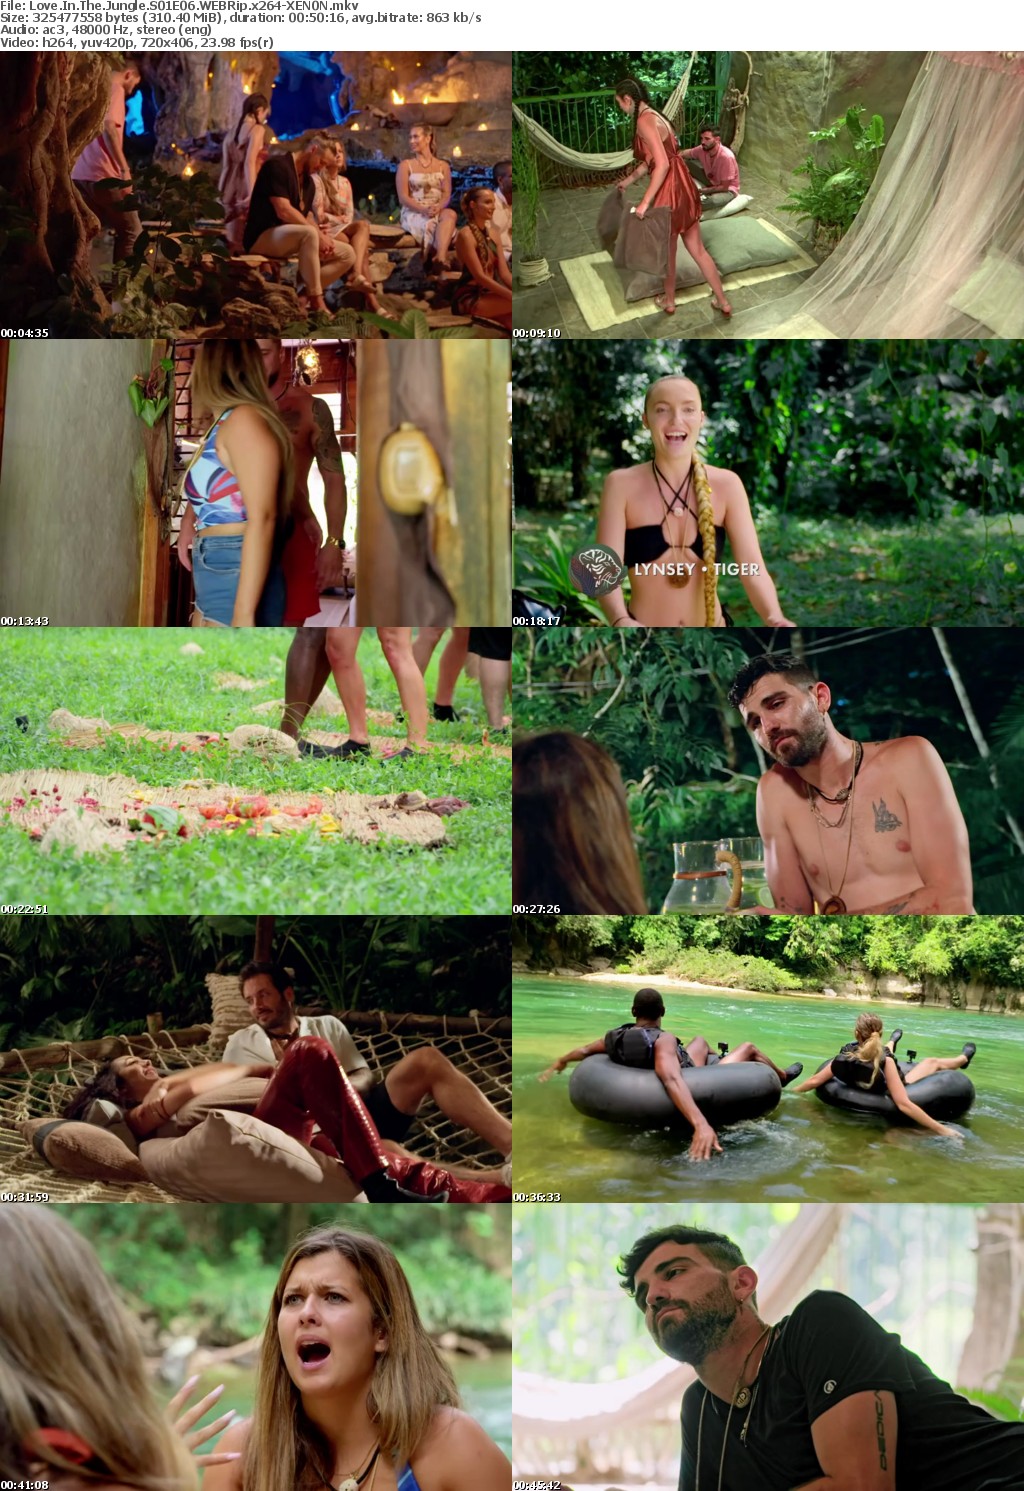 Love In The Jungle S01E06 WEBRip x264-XEN0N